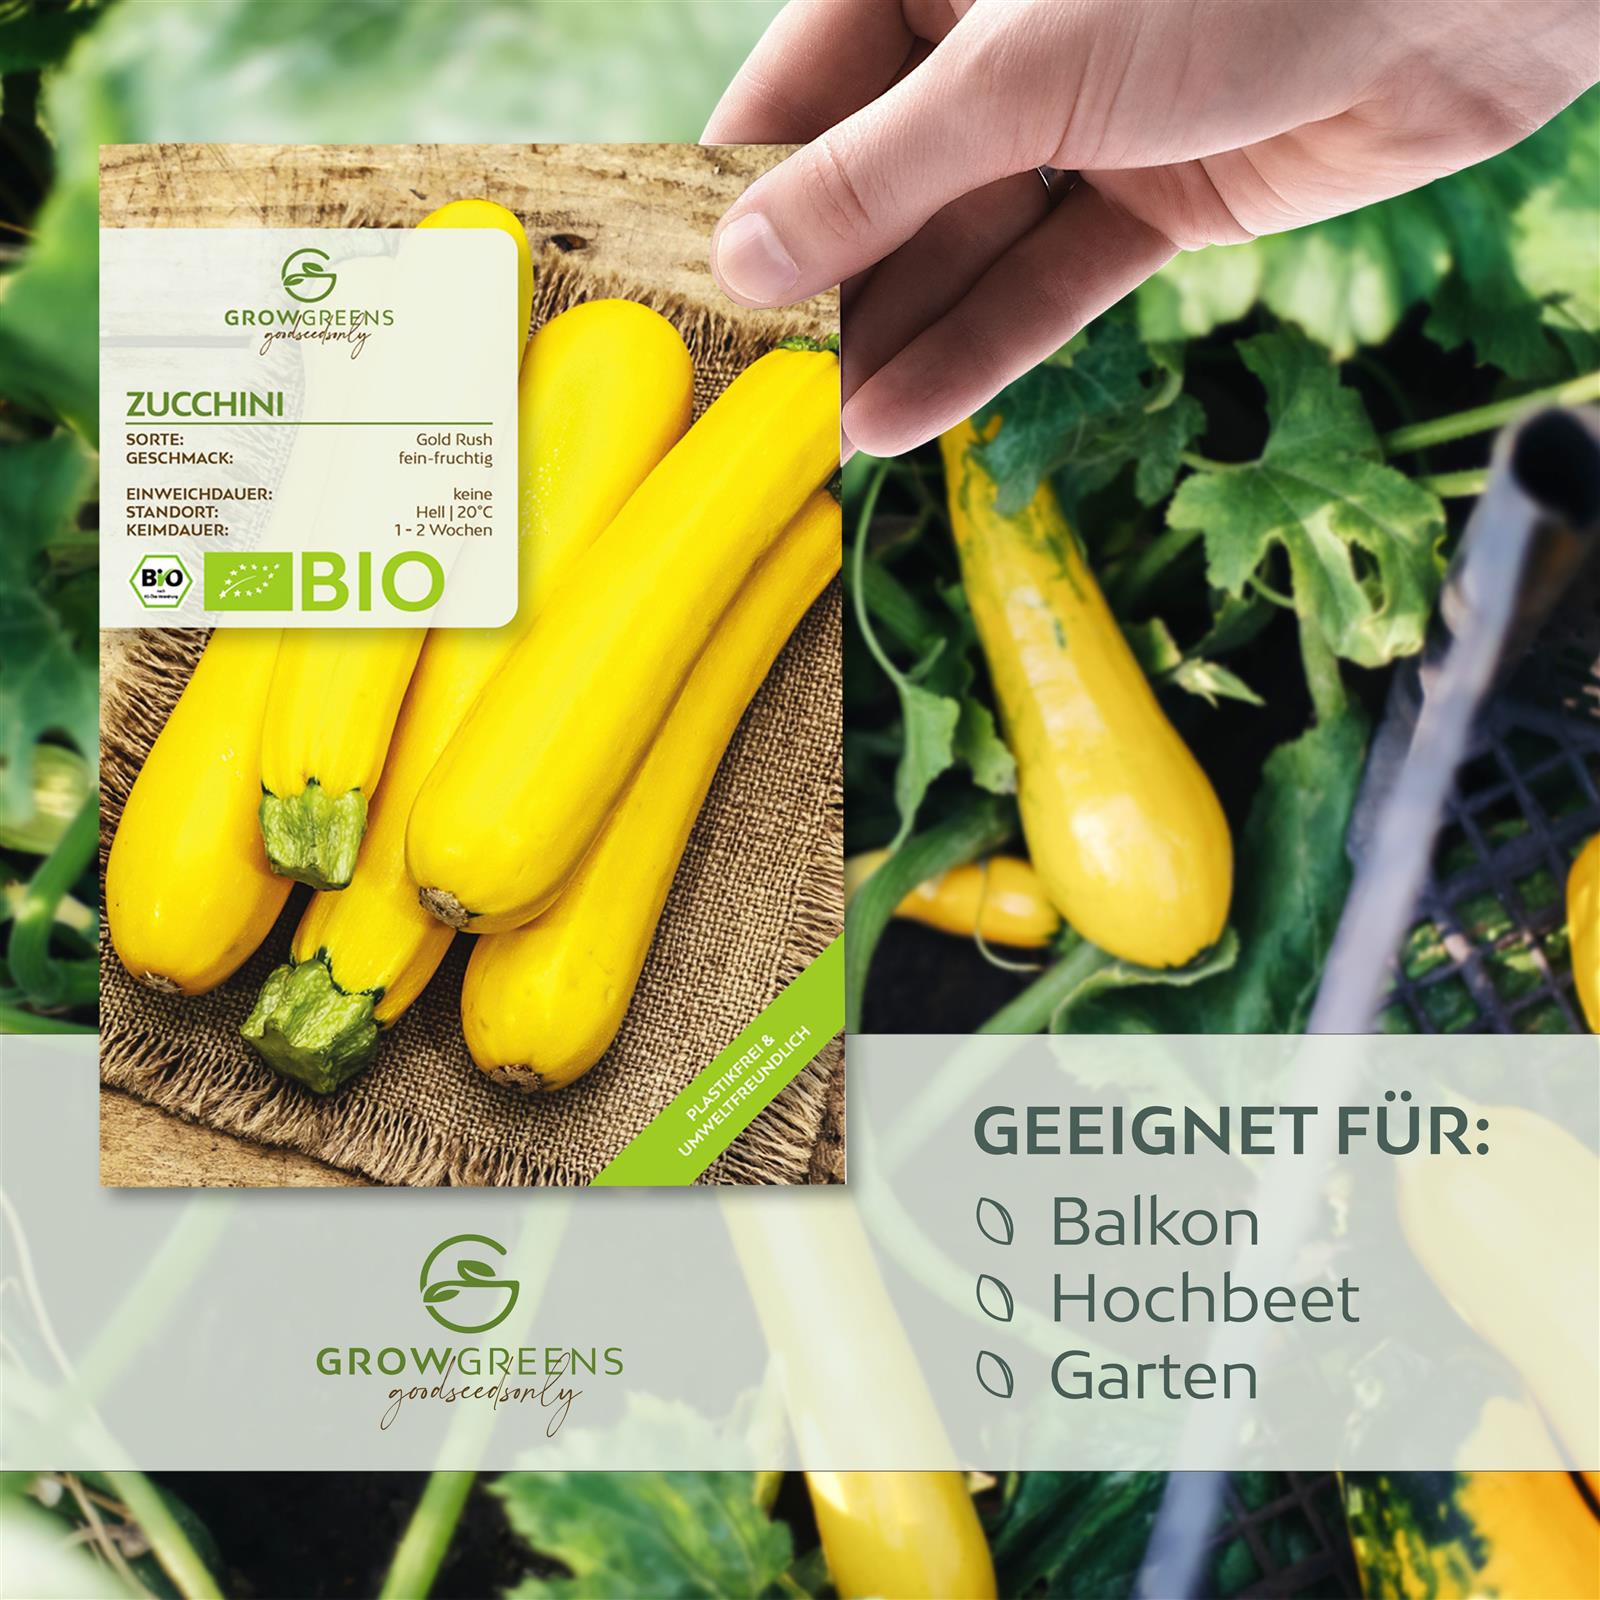 BIO Zucchini Samen Gelb (Gold Rush) - Zucchini Saatgut aus biologischem Anbau (5 Korn)